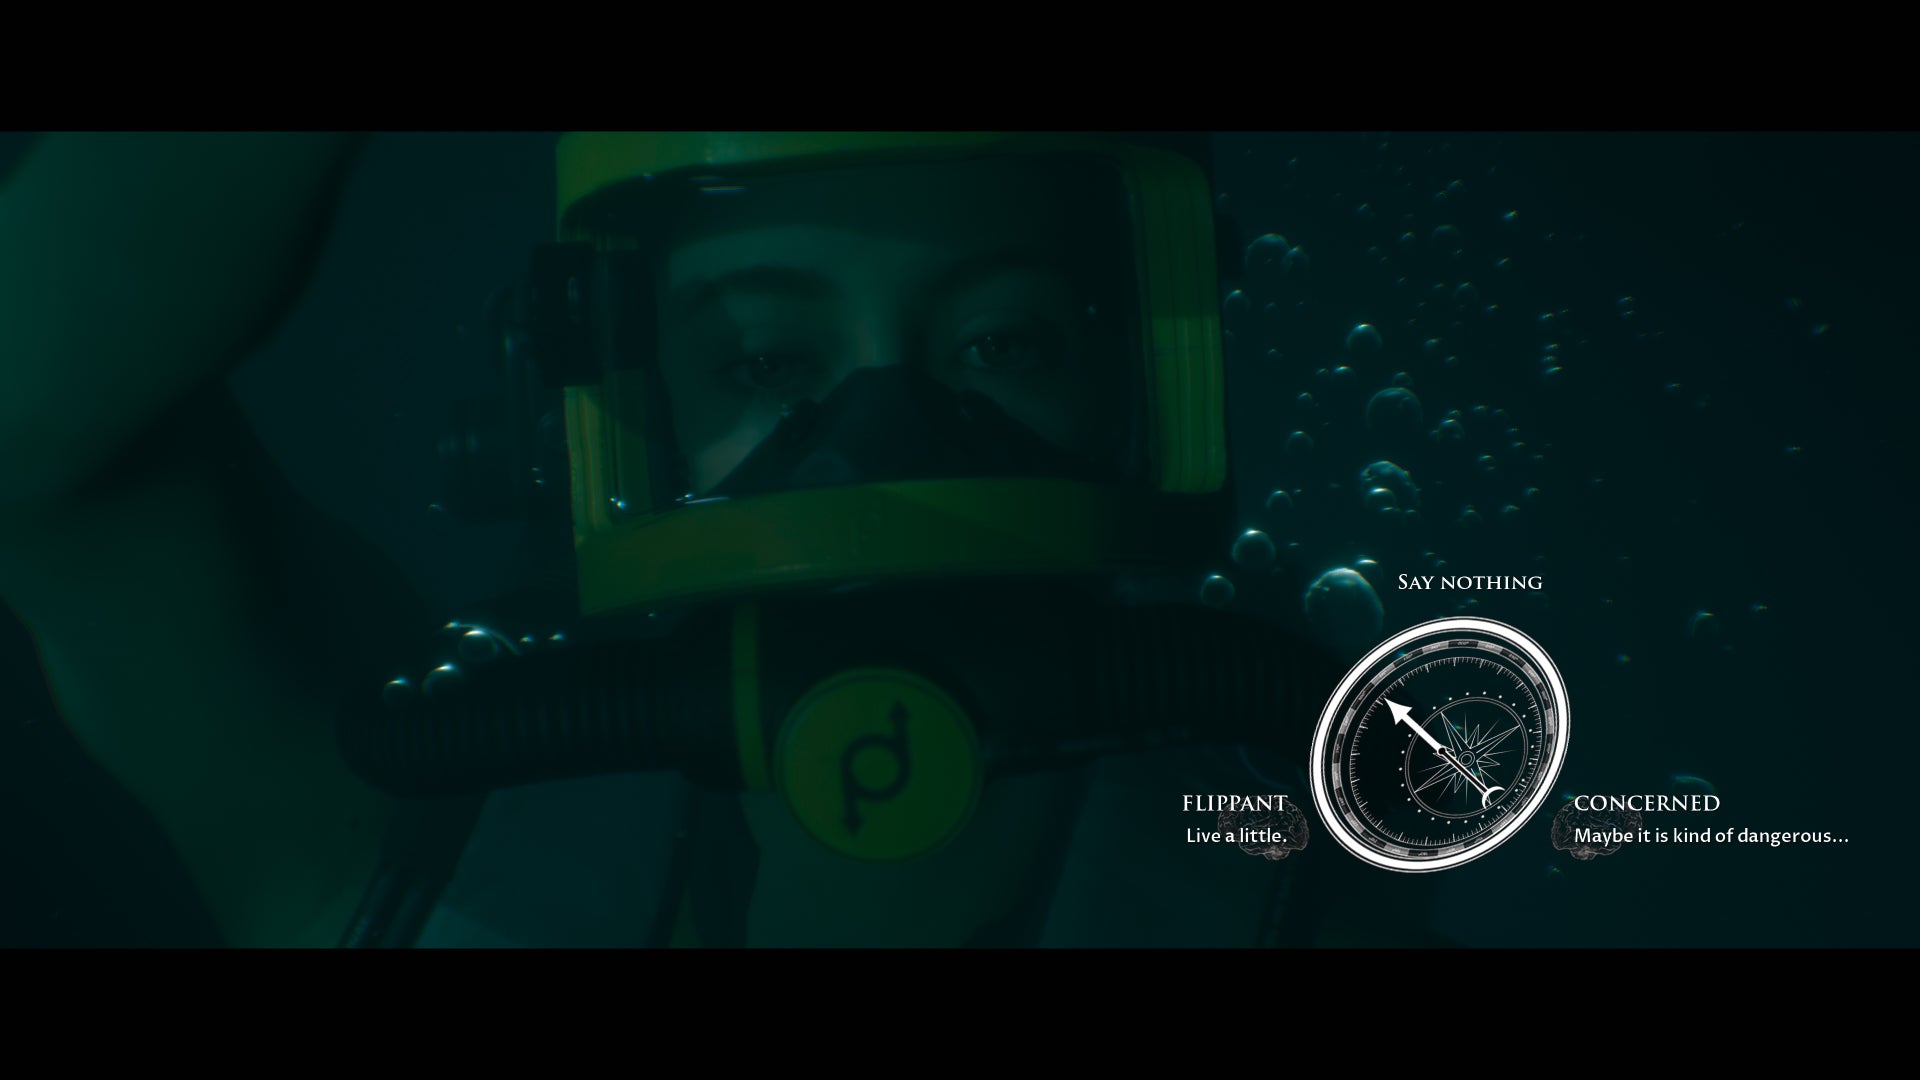 Julia is diving underwater in Man of Medan, choosing whether to be flippant or concerned.